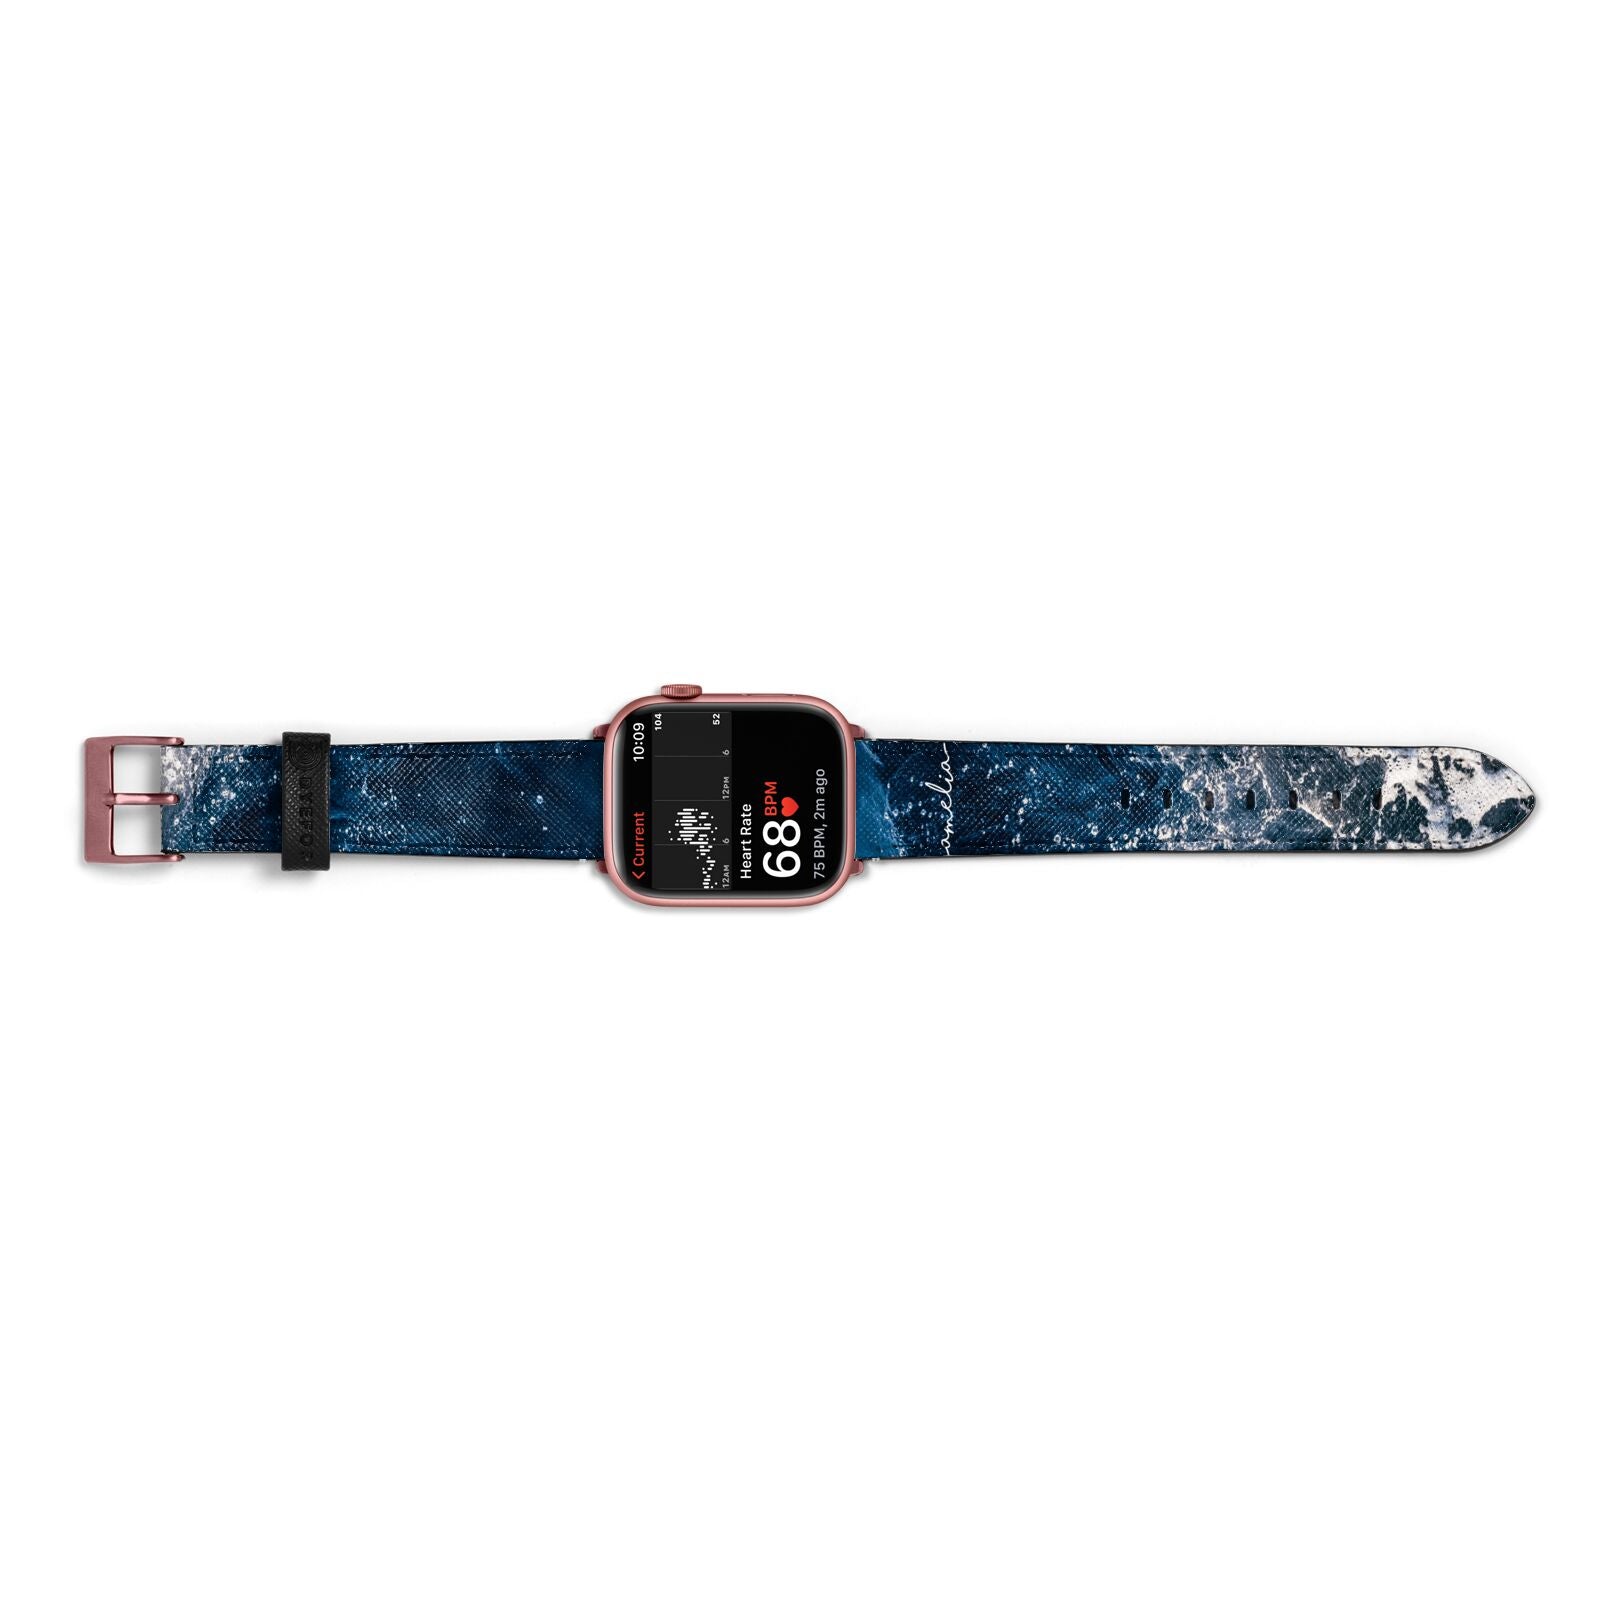 Custom Sea Apple Watch Strap Size 38mm Landscape Image Rose Gold Hardware